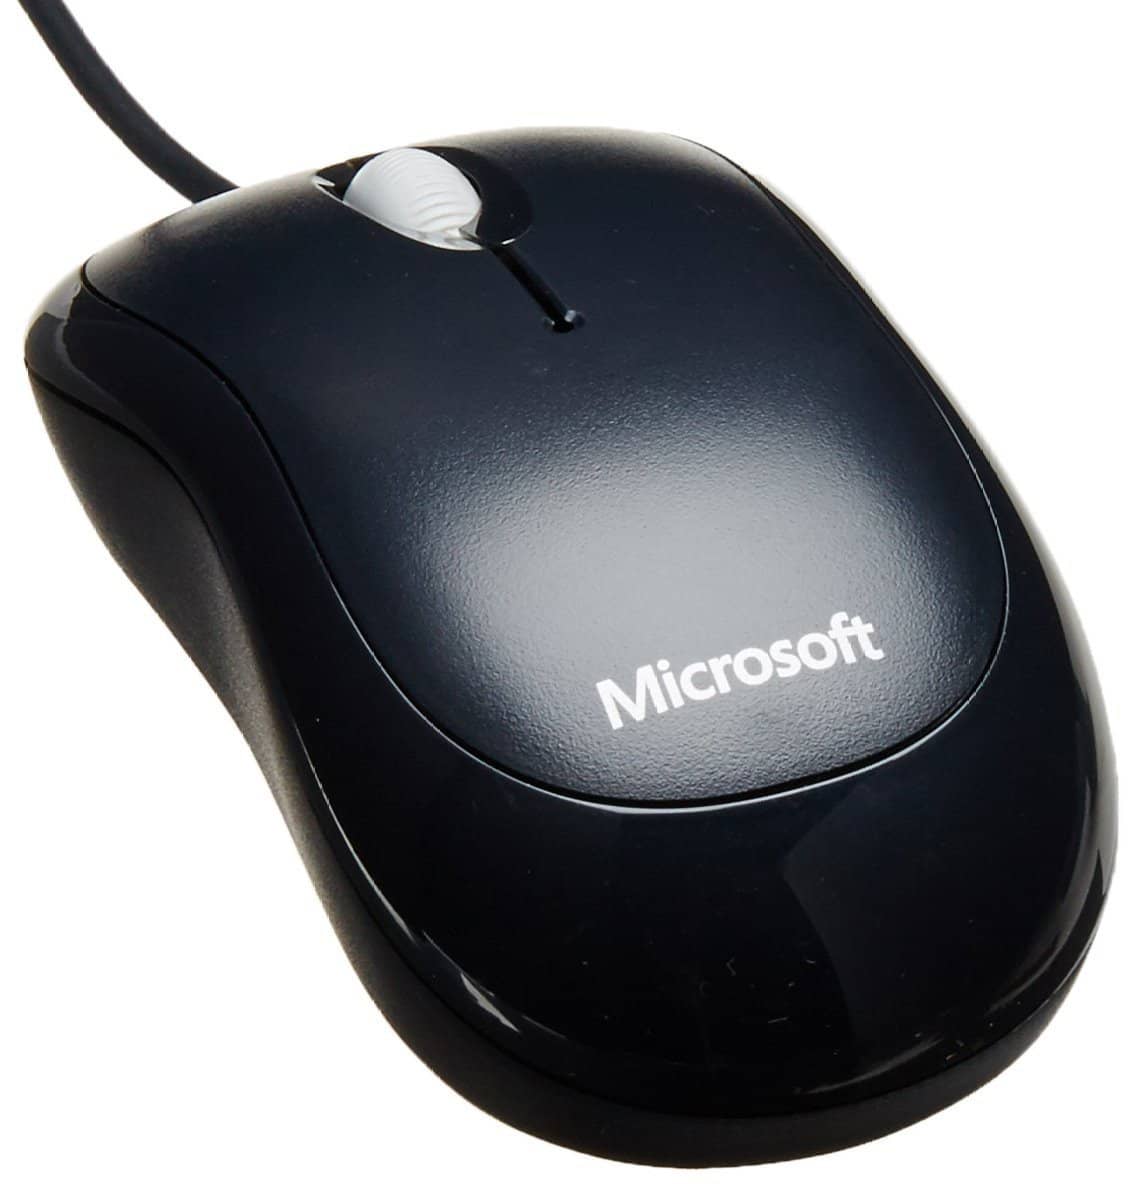 Microsoft Wired Desktop 600 Combo